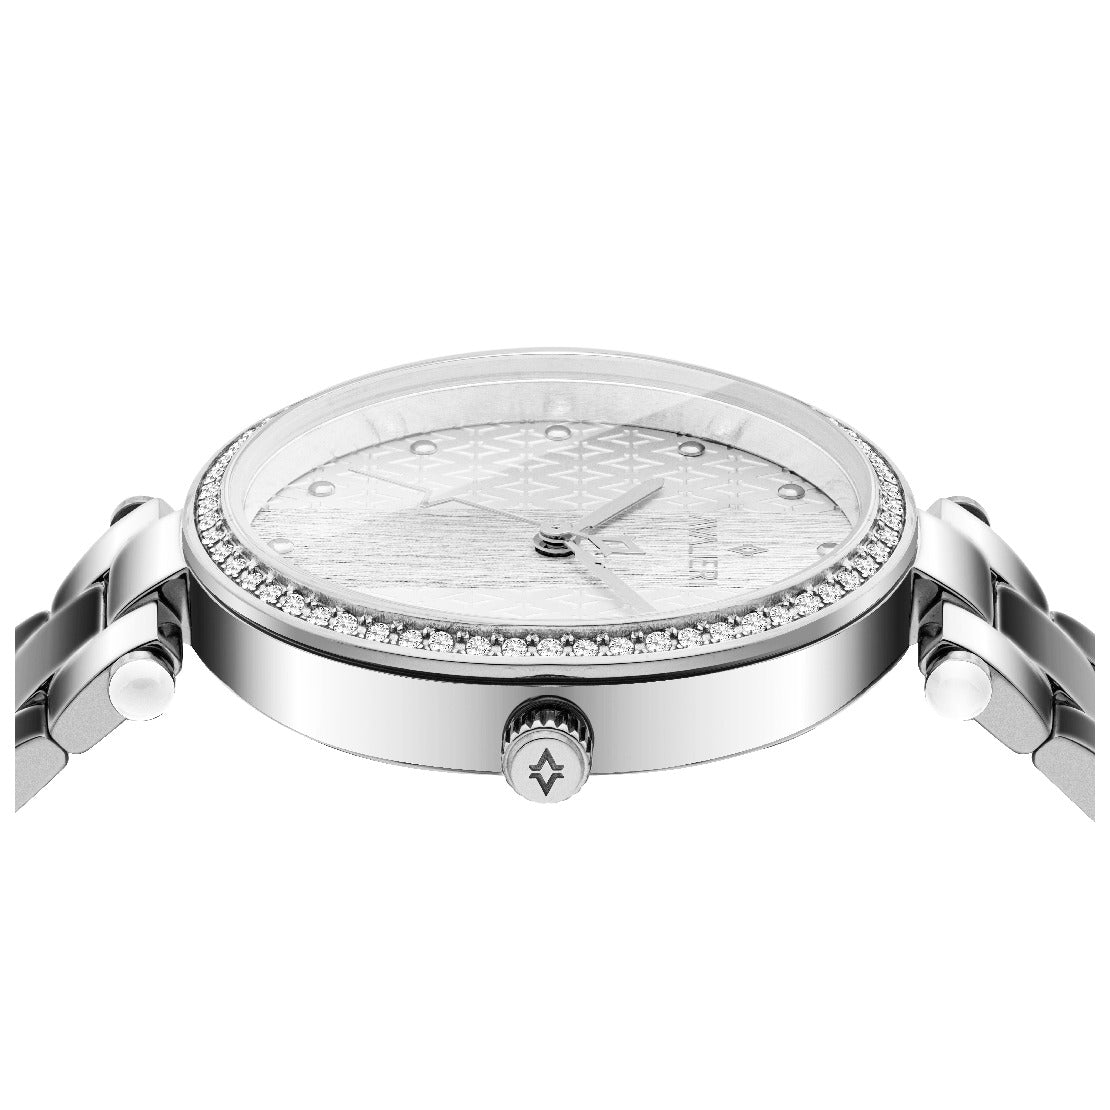 Avalieri Women's Quartz Watch Silver Dial - AV-2444B